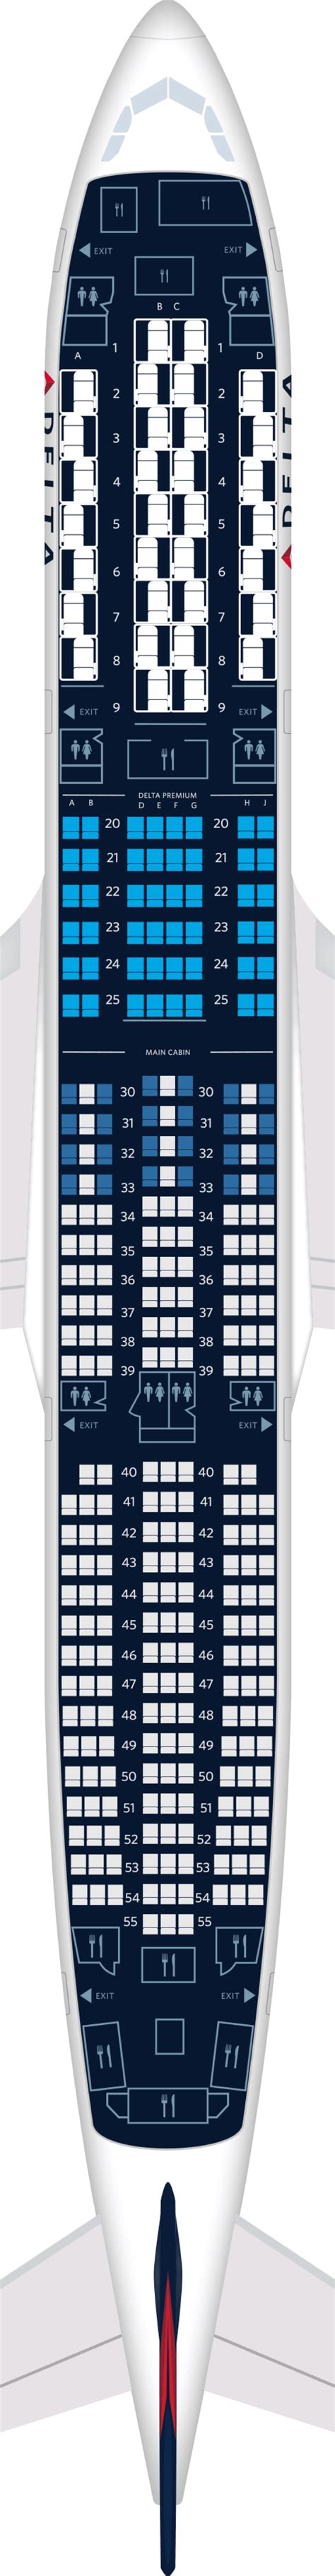 Air France Airbus A350 900 Seating Plan Image To U